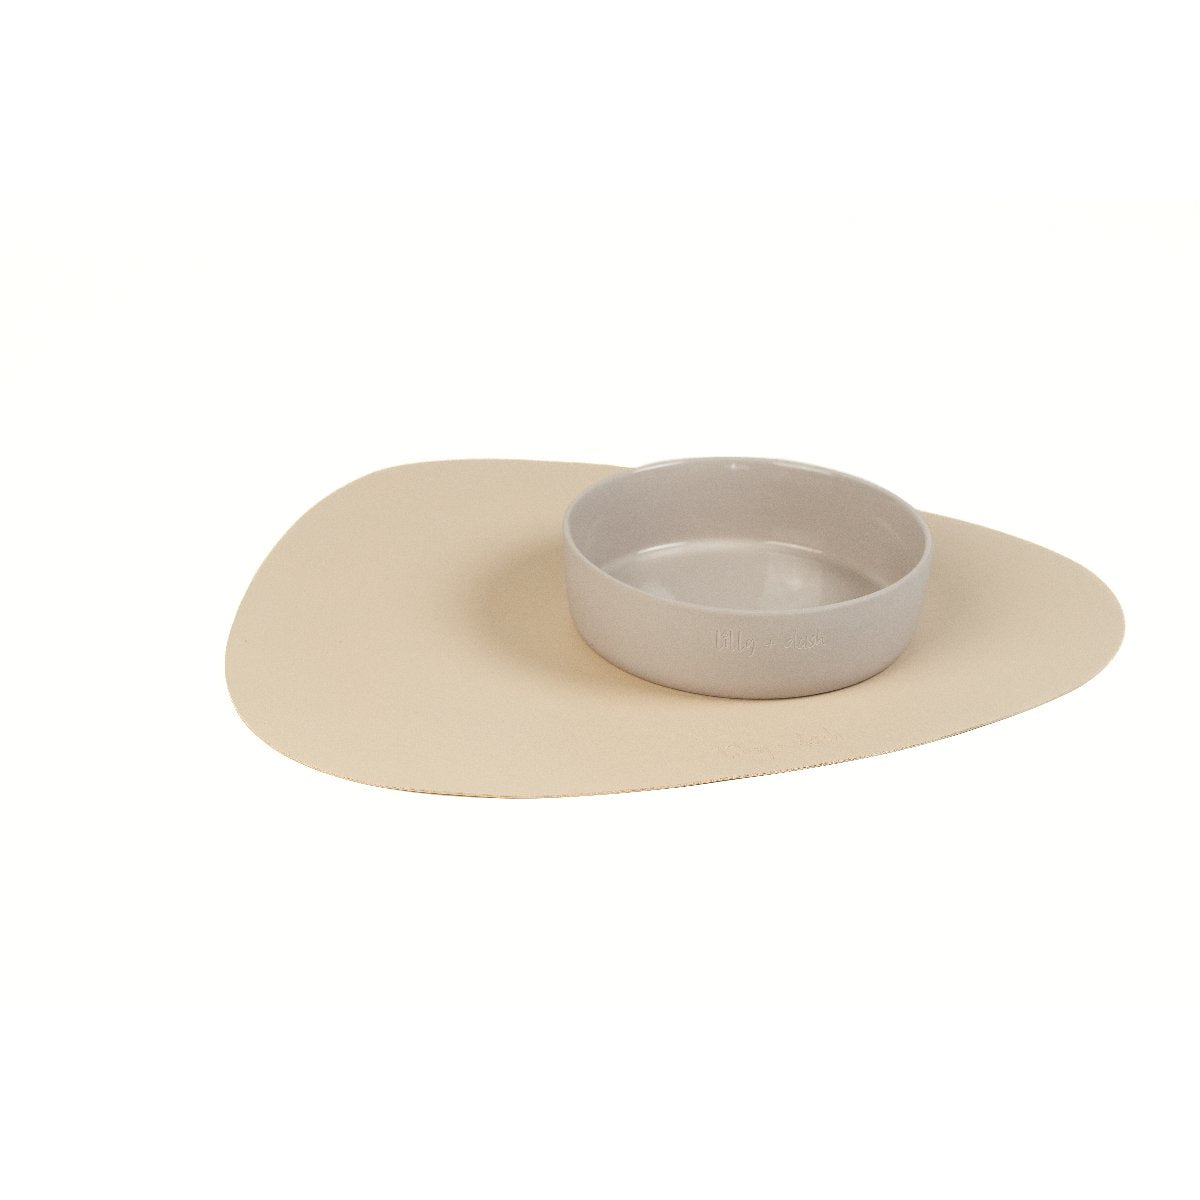 mondocherry - Lilly + Dash | ceramic dog bowl | slate - placemat